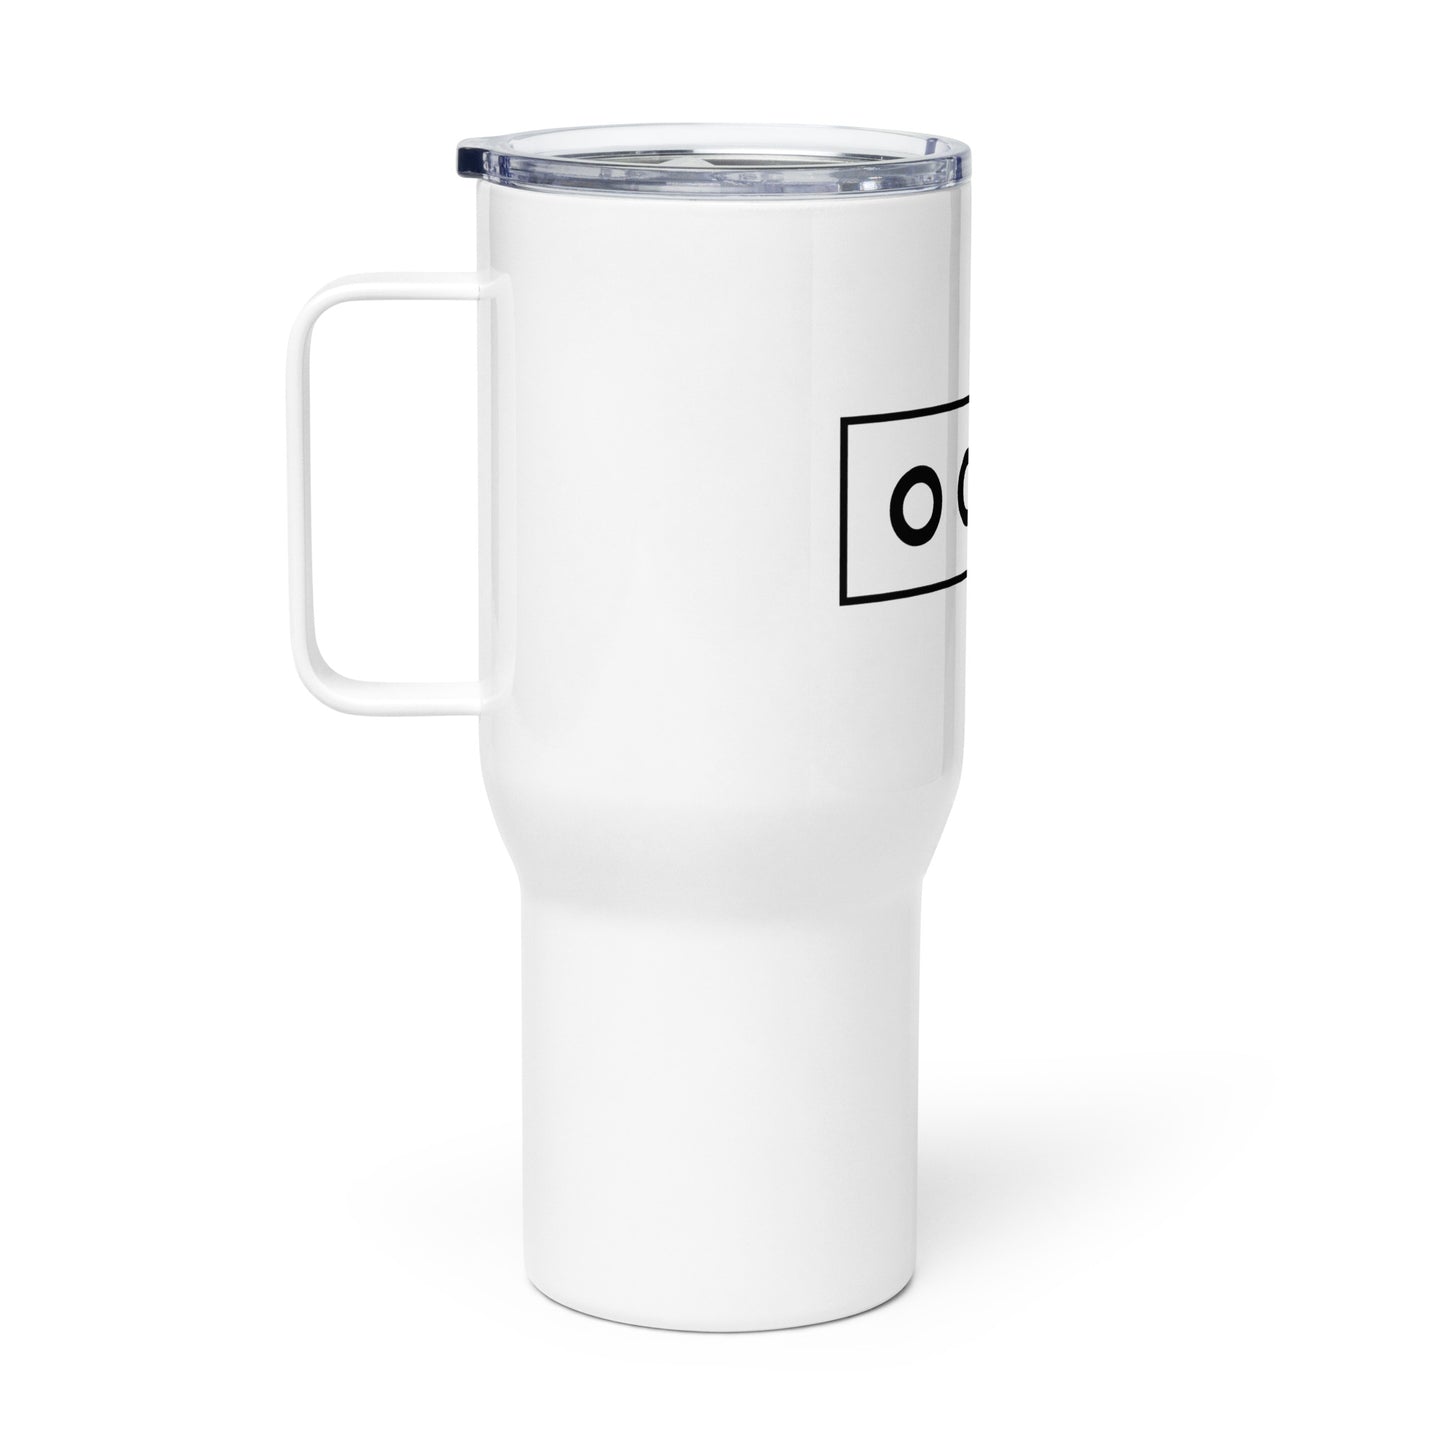 Ocho Travel mug with a handle